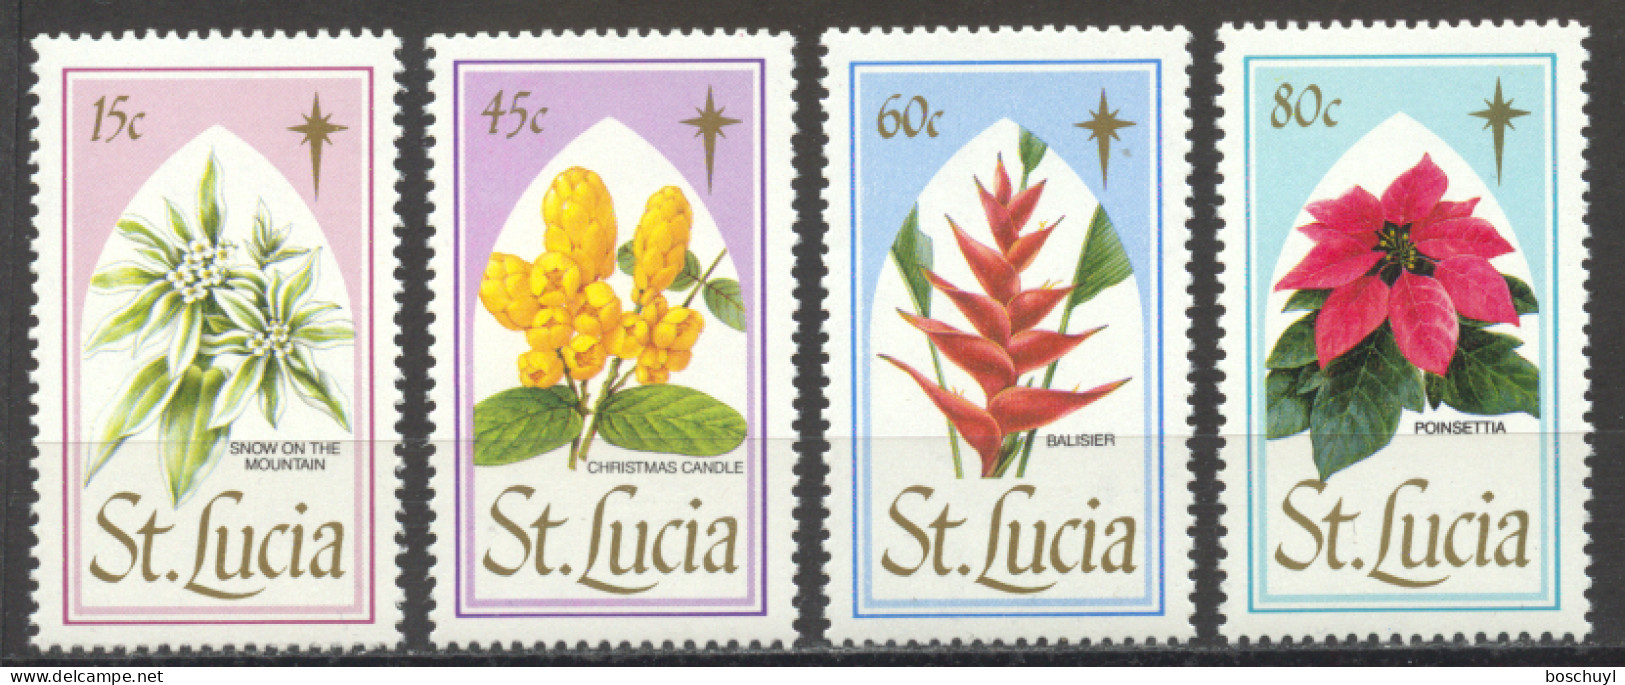 St Lucia, 1988, Christmas, Flowers, Flora, Nature, MNH, Michel 937-940 - St.Lucia (1979-...)